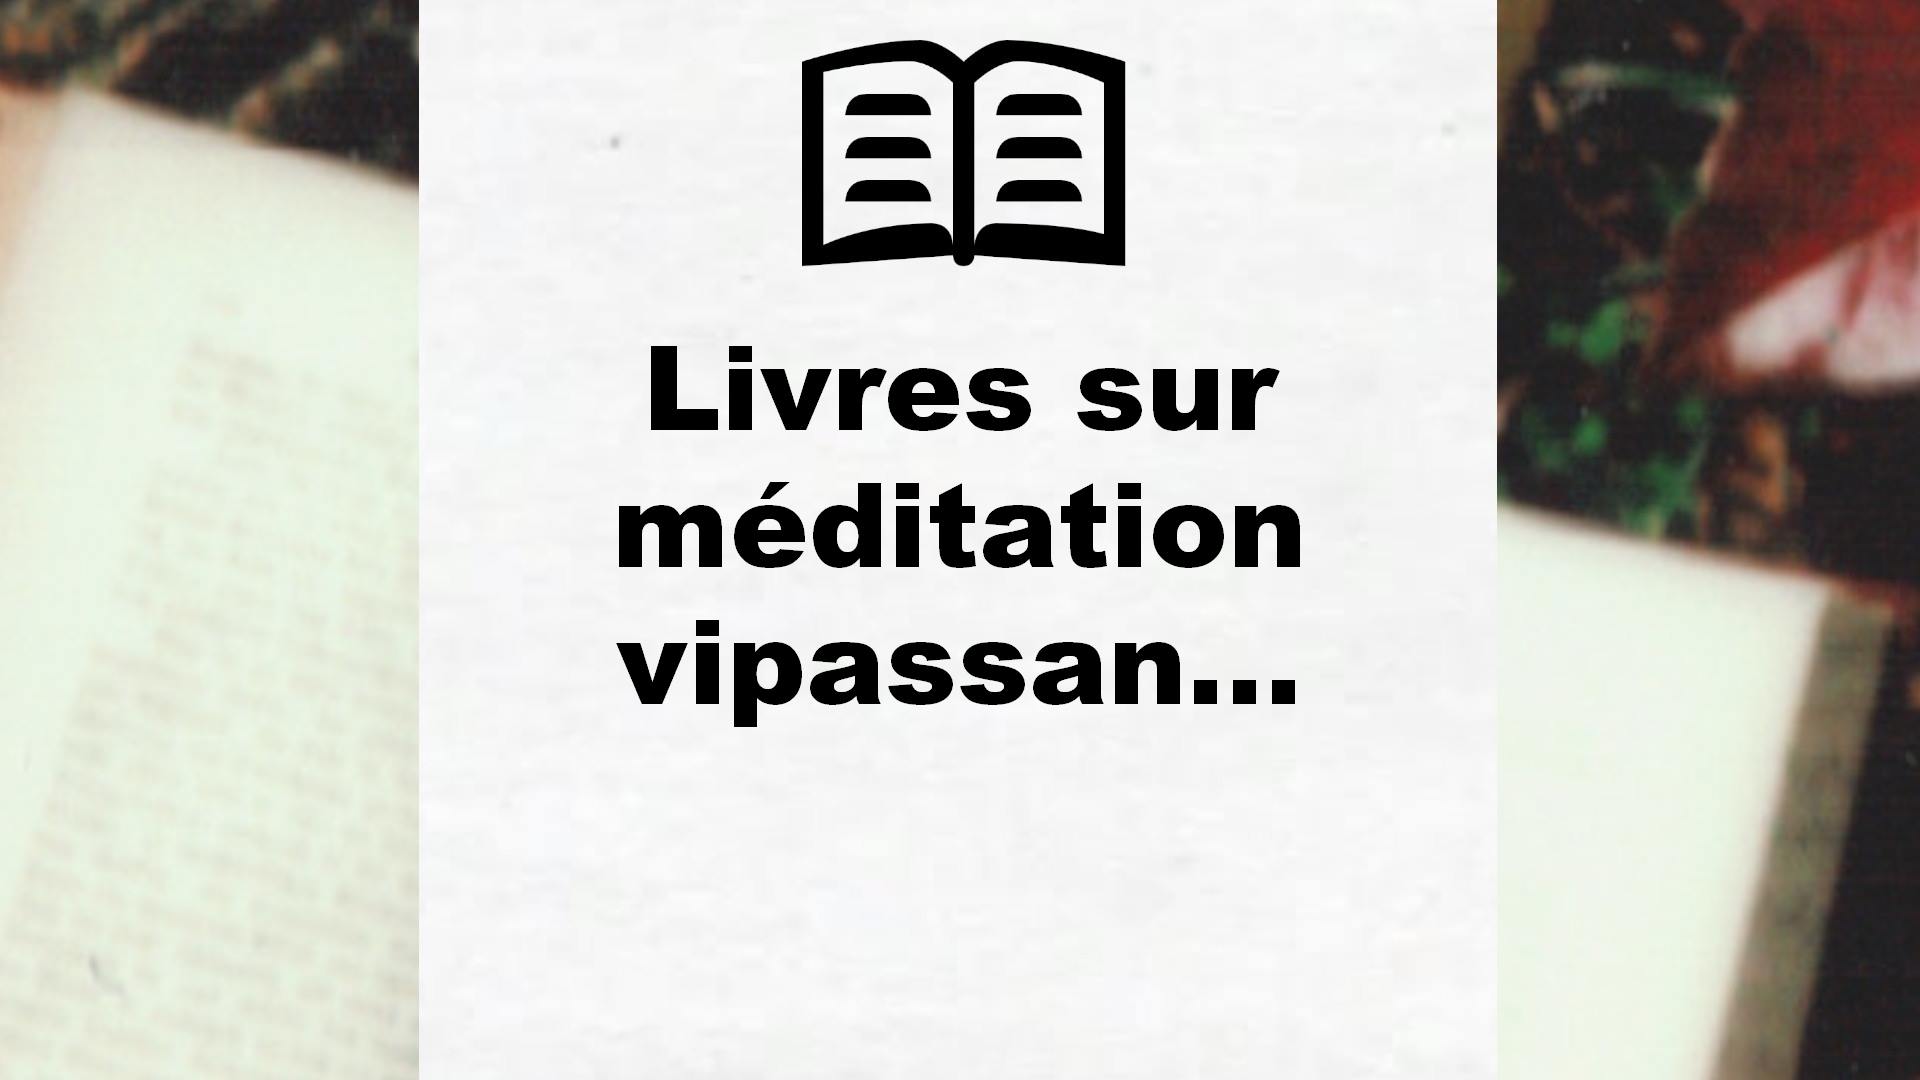 Livres sur méditation vipassana